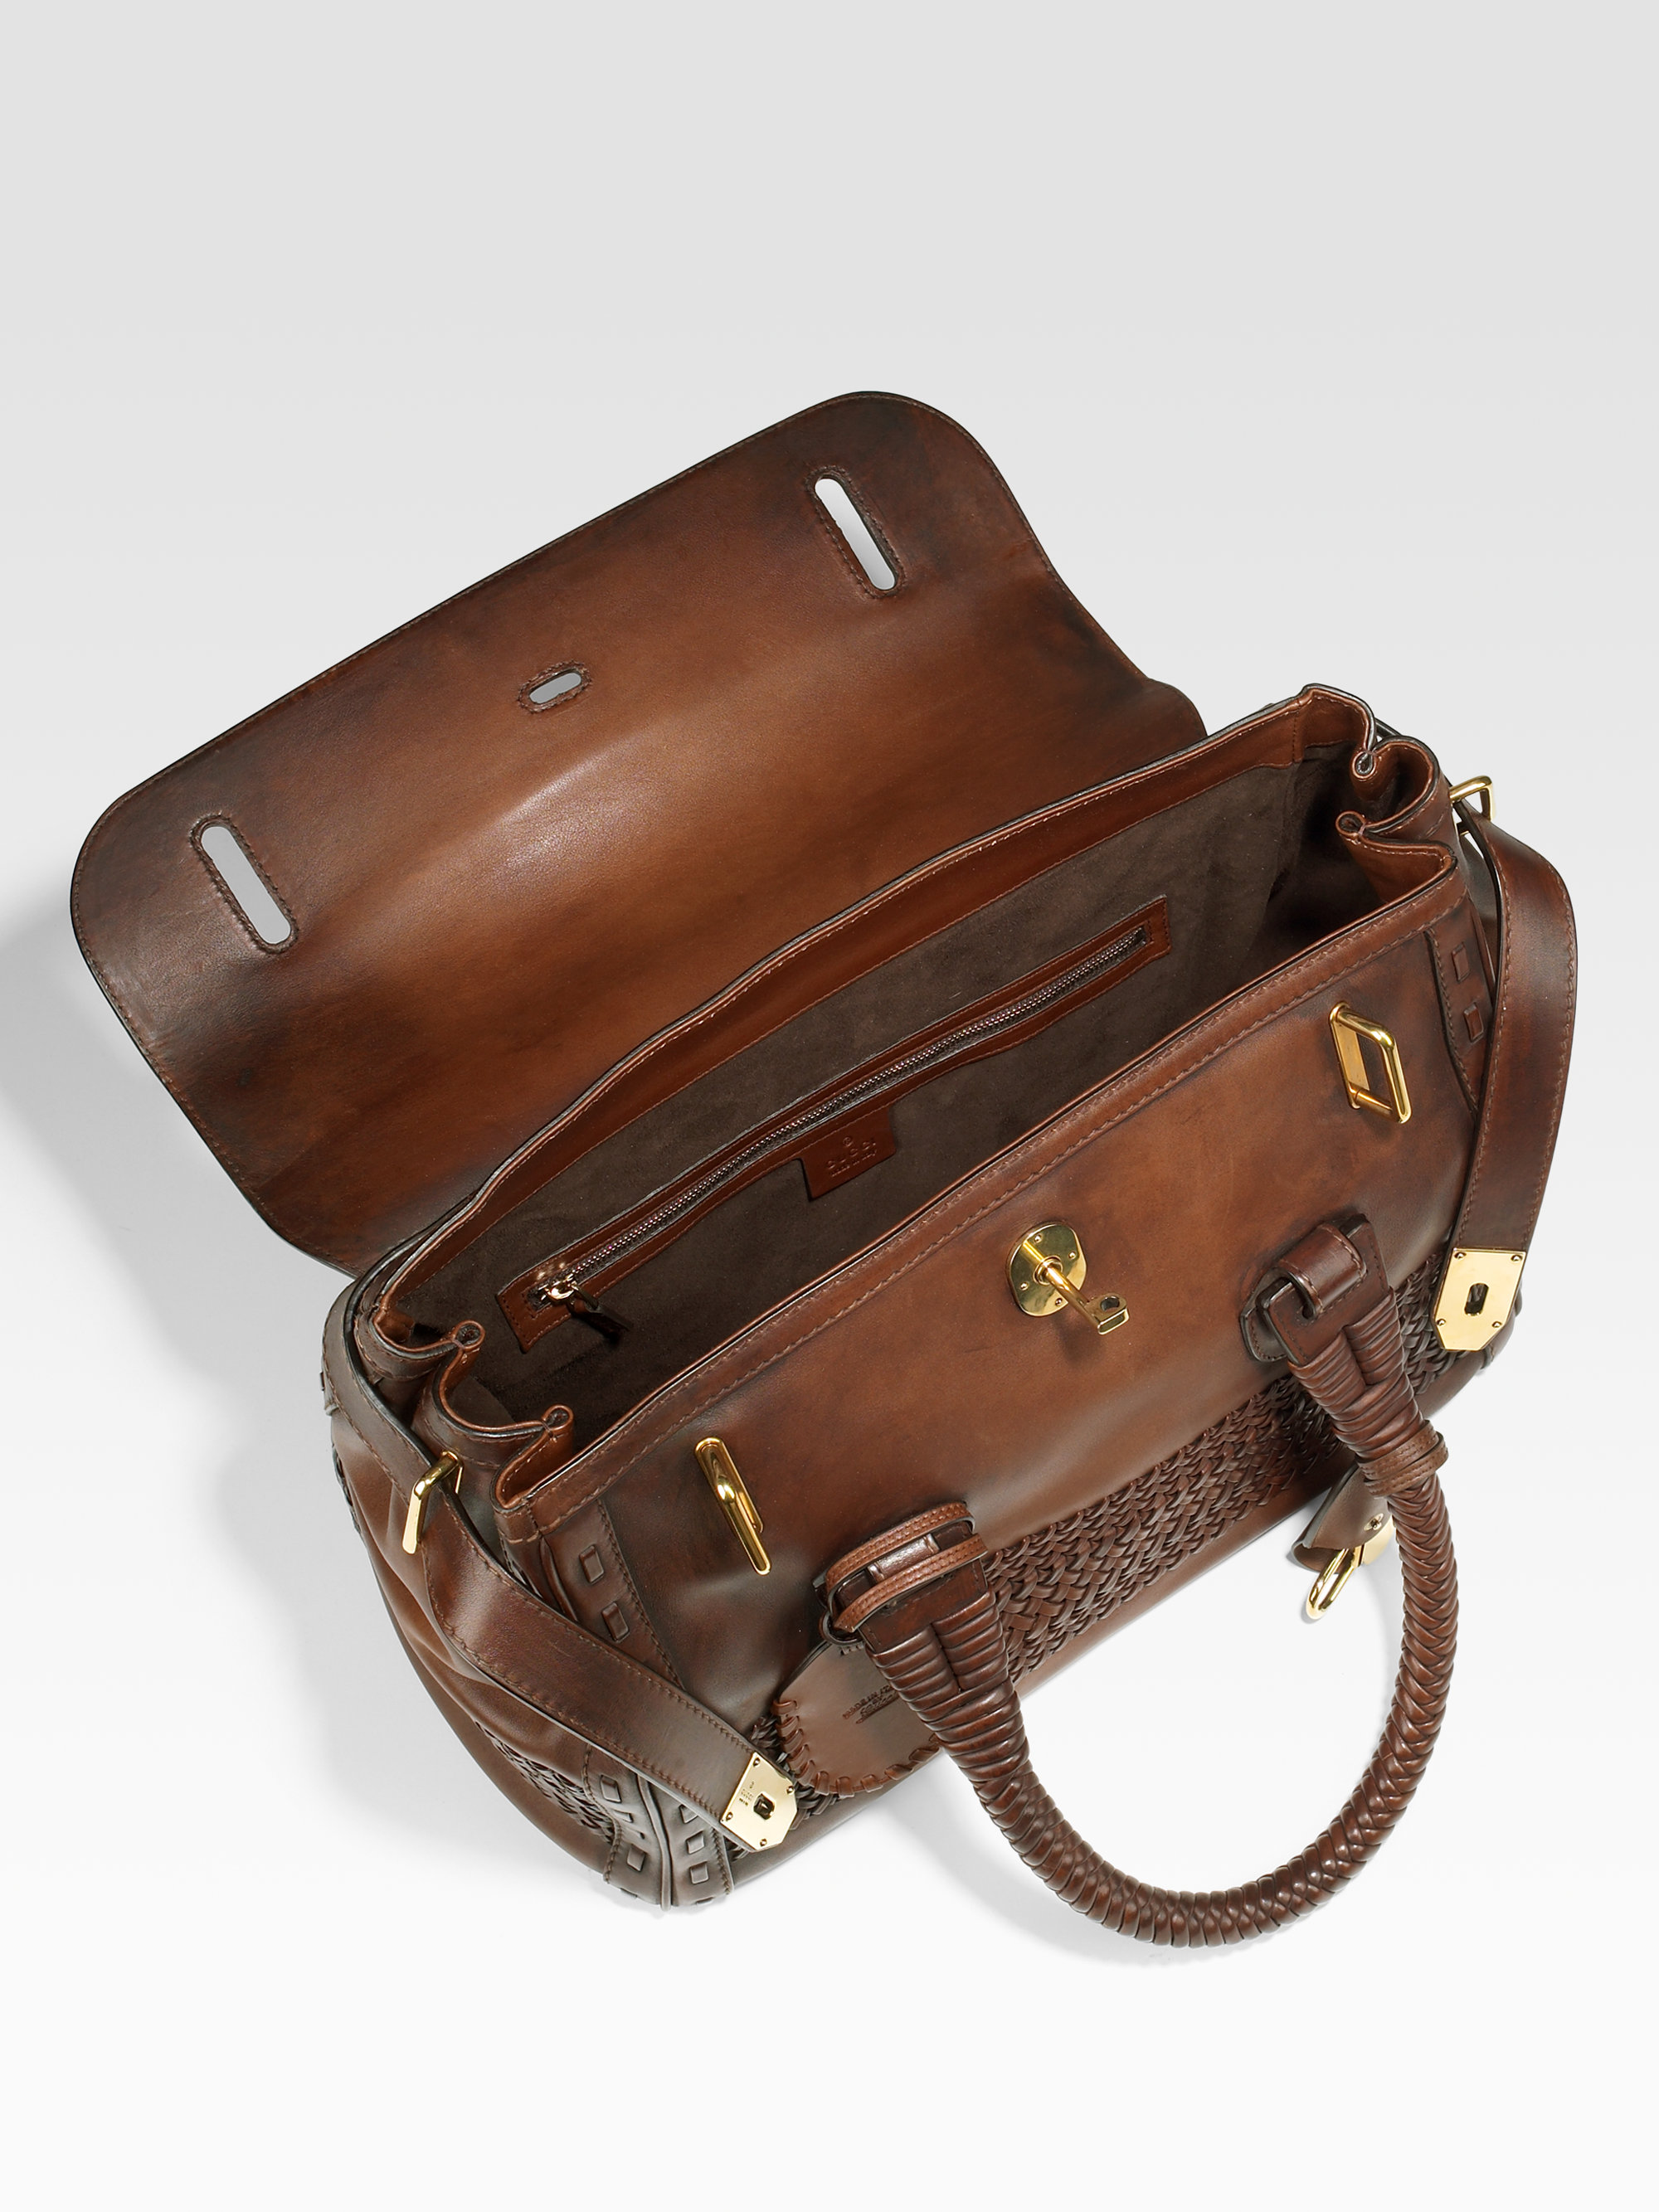 Gucci Handmade Large Top Handle Bag in Brown - Lyst